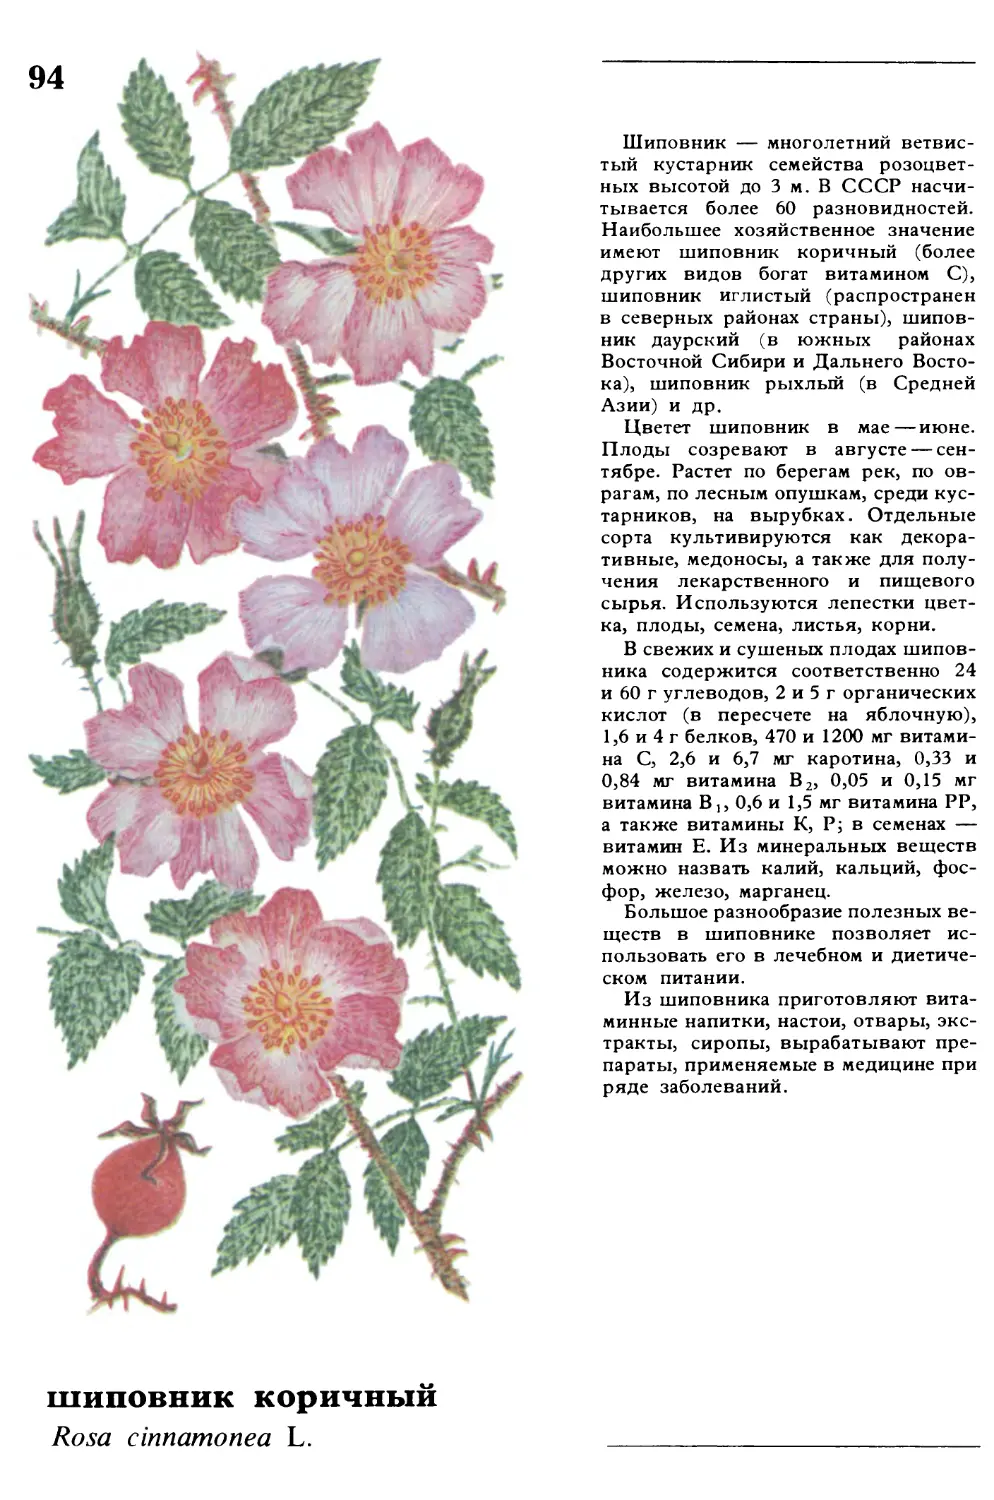 Шиповник
шиповник коричный
Rosa cinnamonea L.